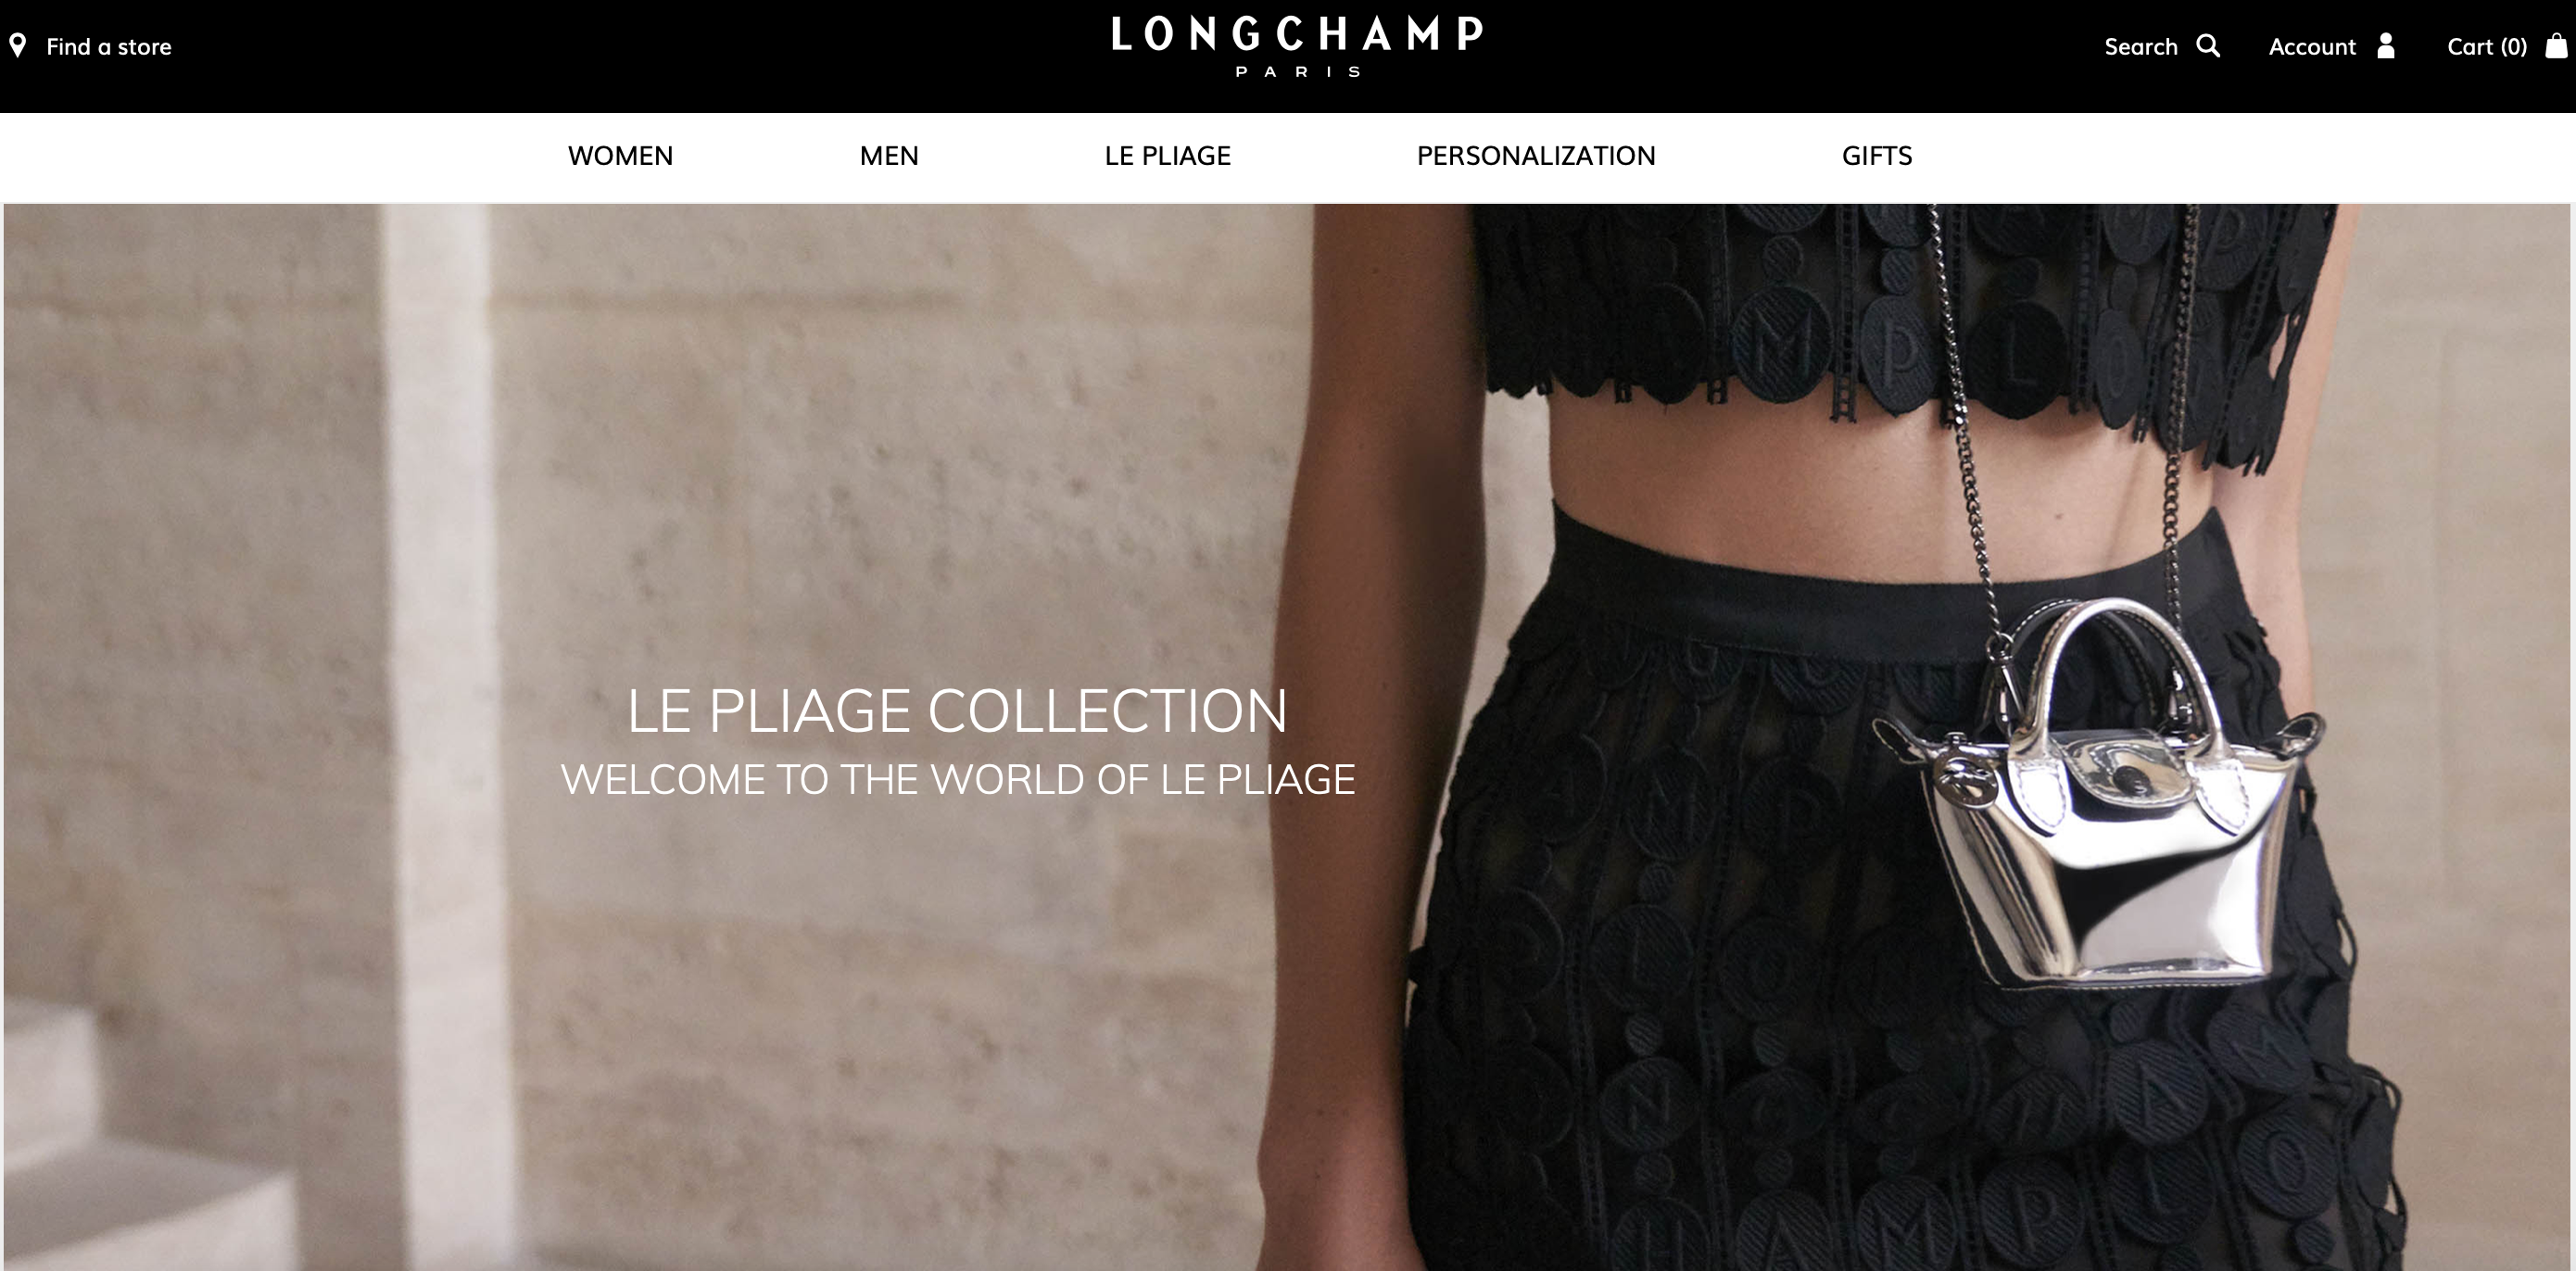 LONGCHAMP New Collection 2020